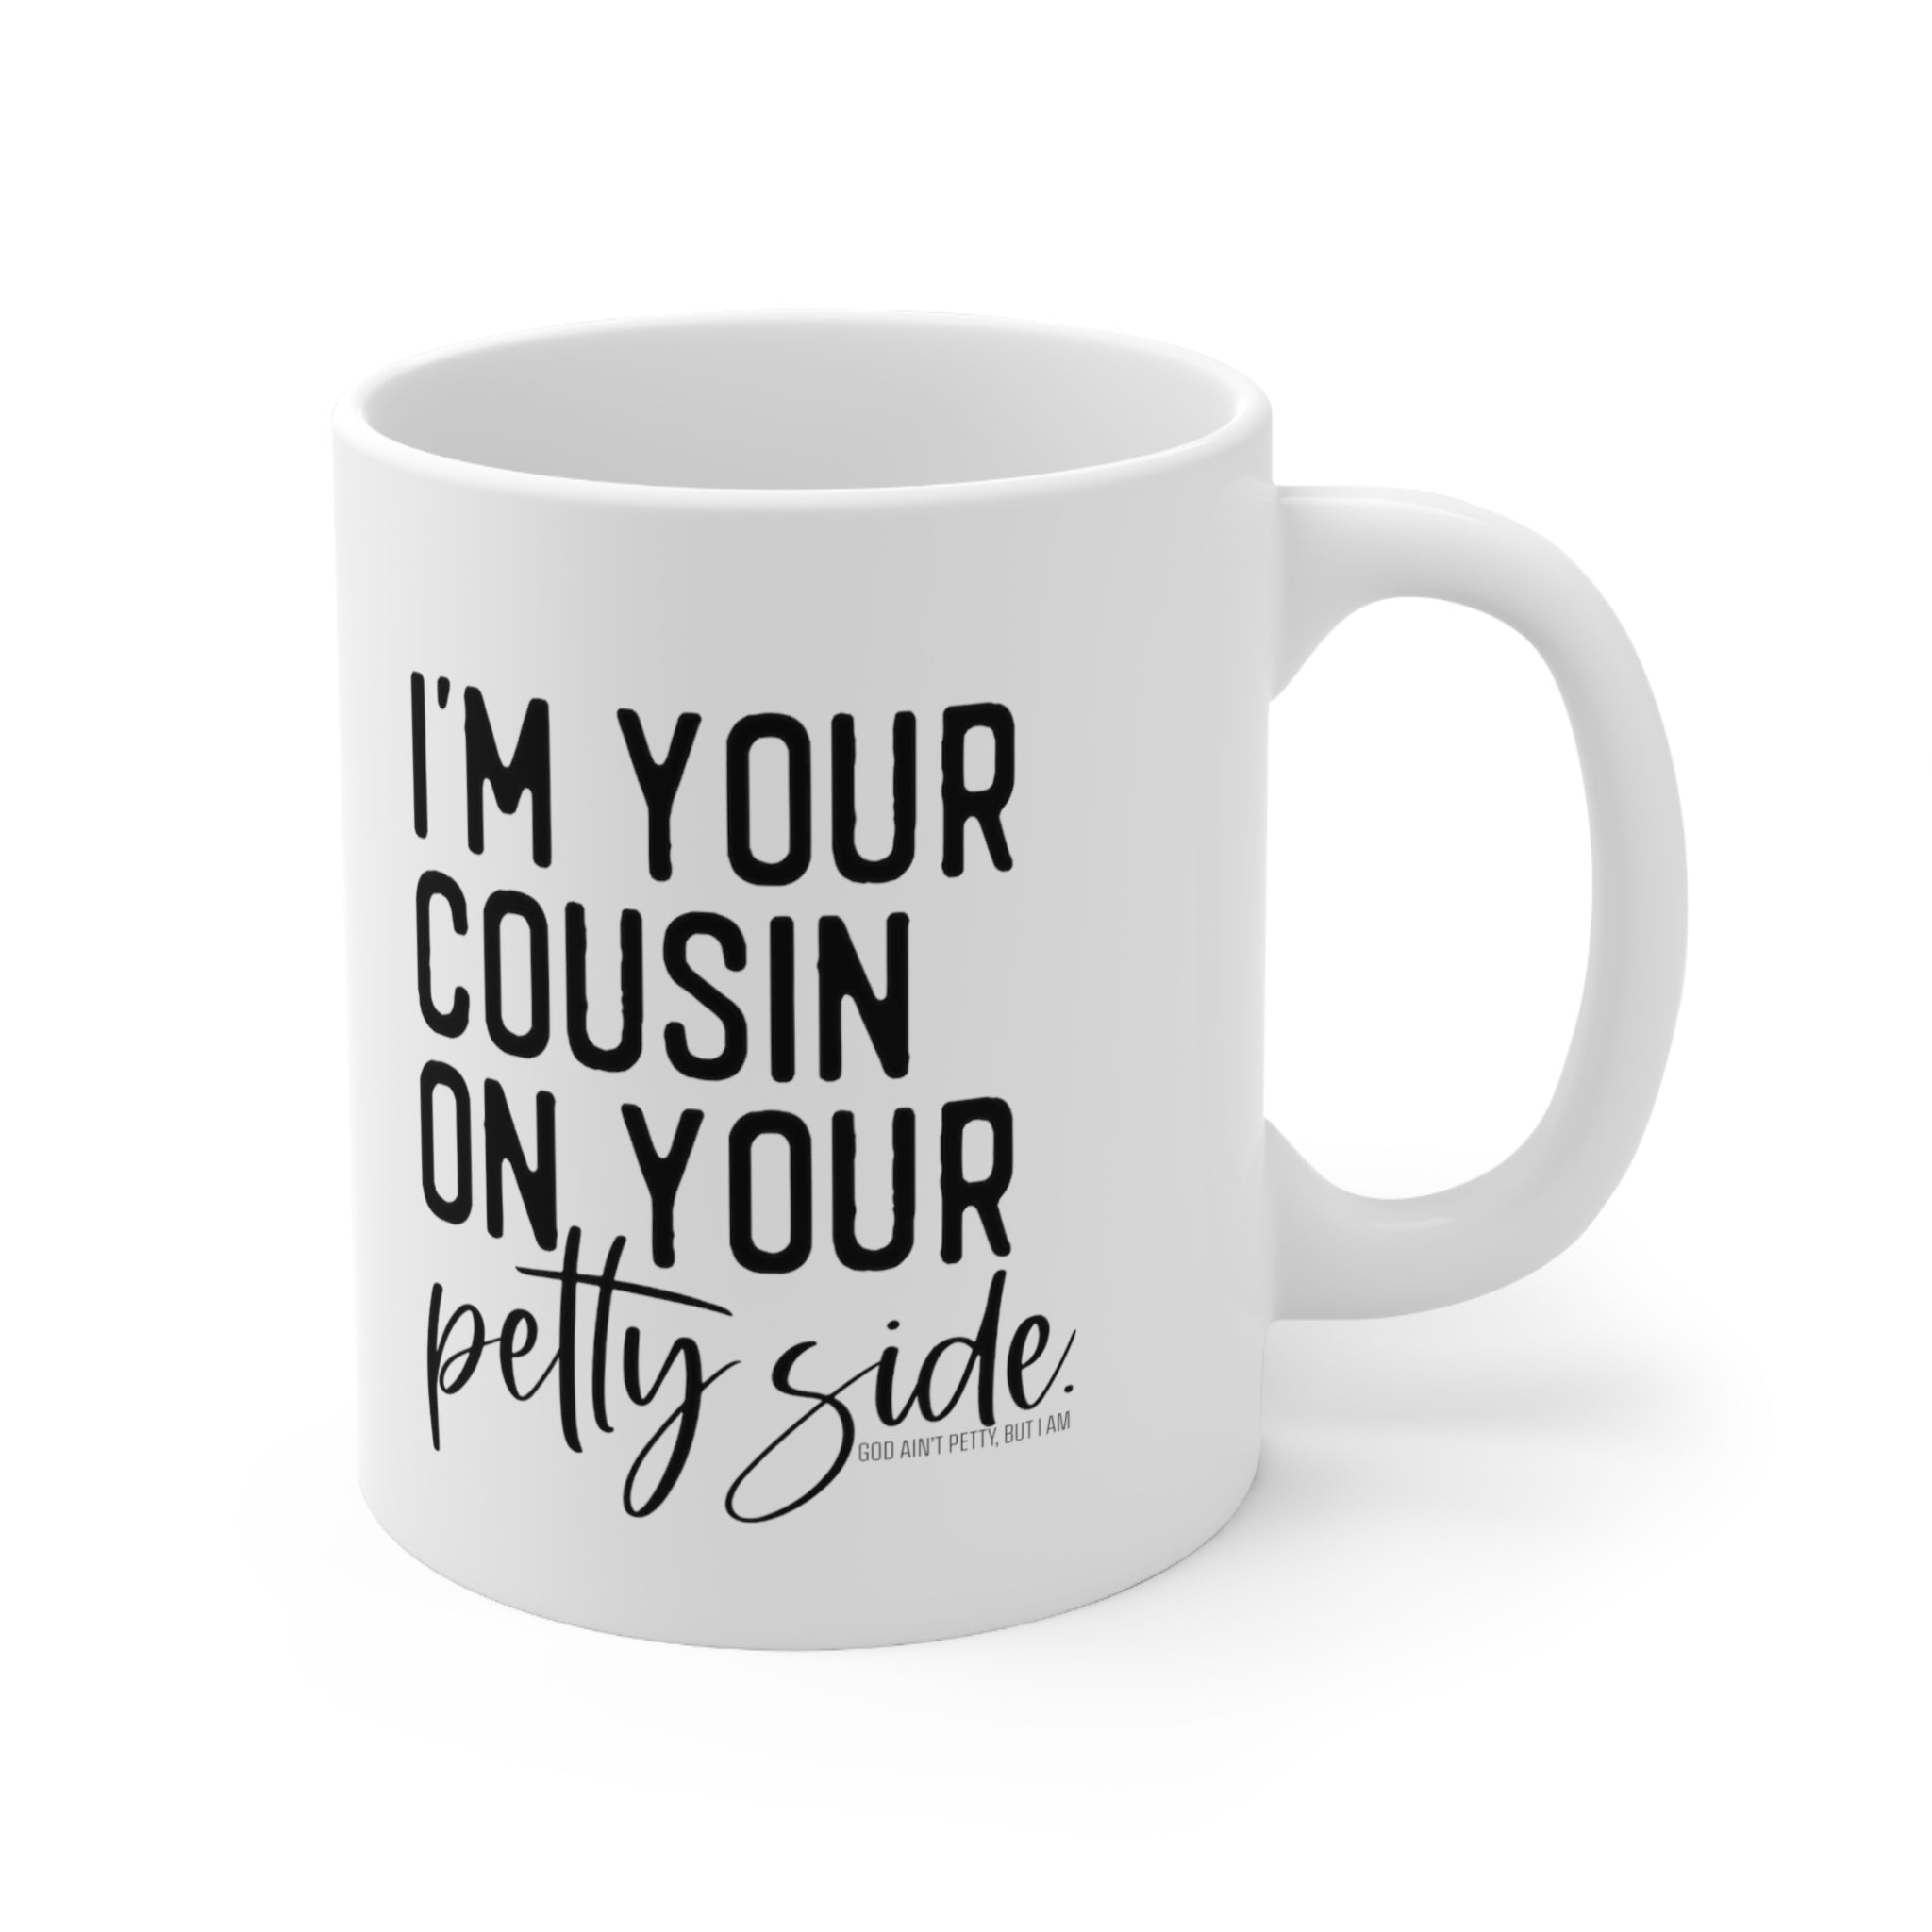 I'm your cousin on your petty side Mug 11oz (White/Black)-Mug-The Original God Ain't Petty But I Am